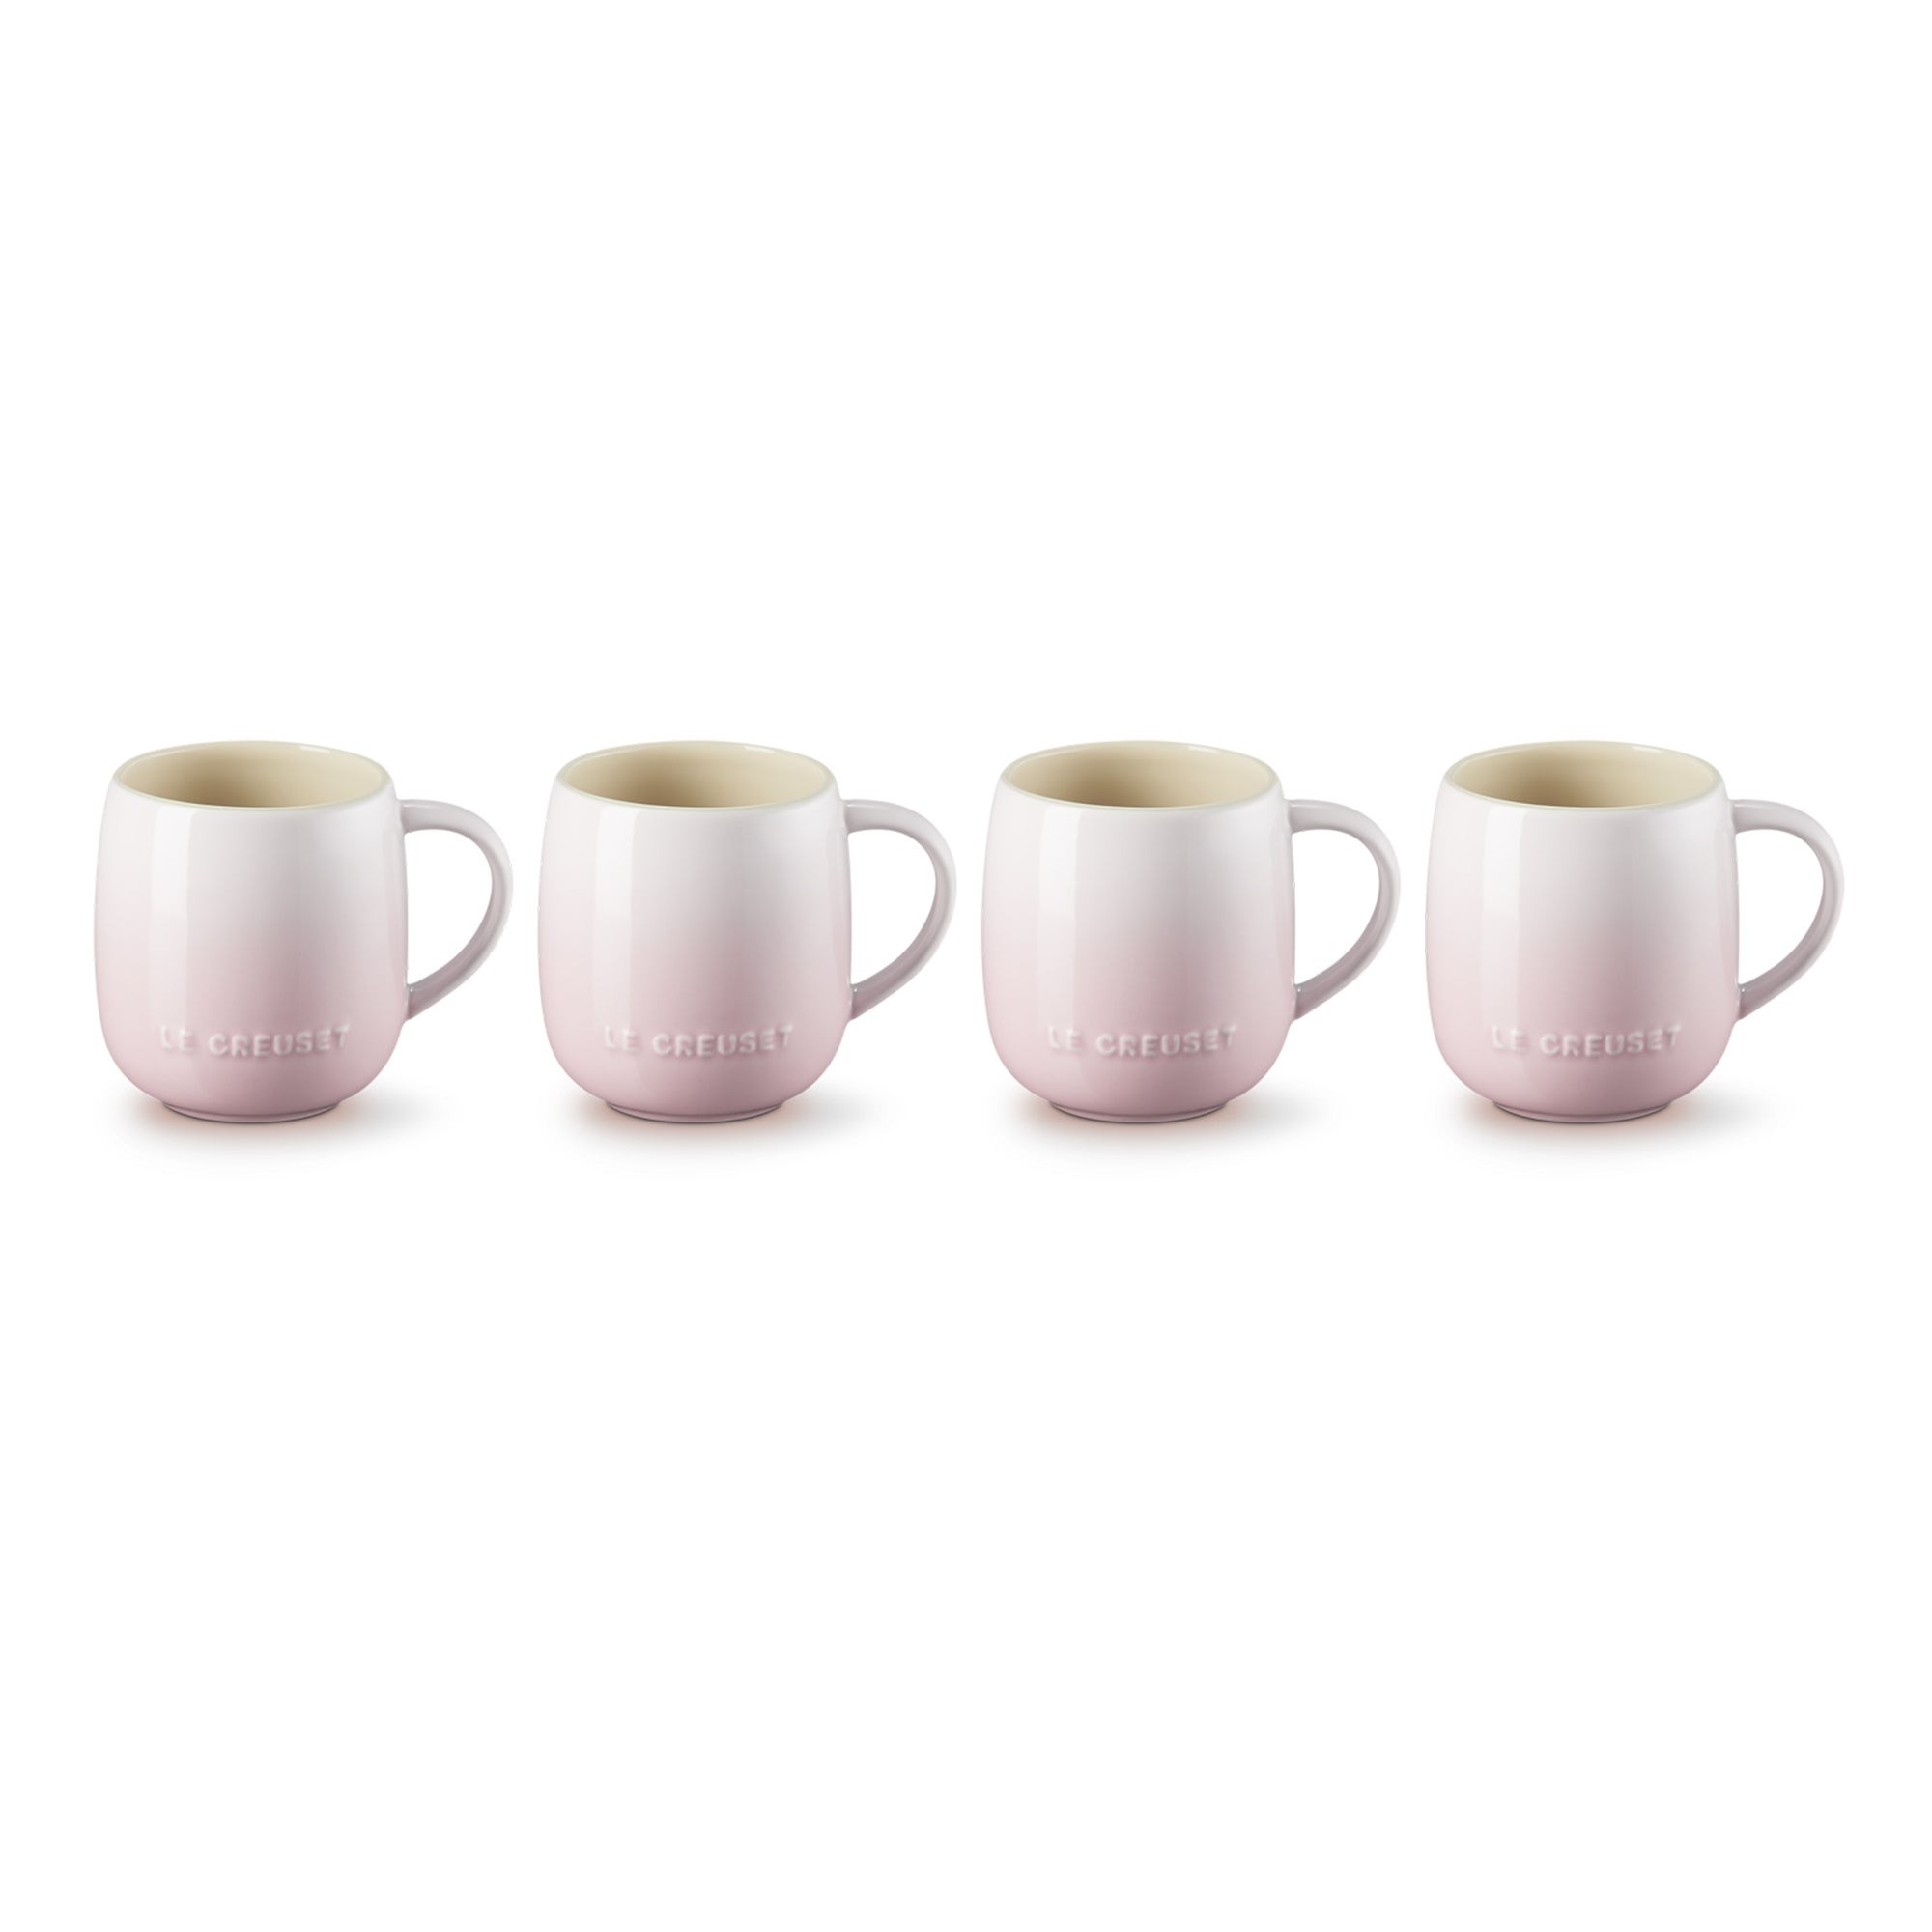 13oz Heritage Mugs - Set of 4 Shell Pink